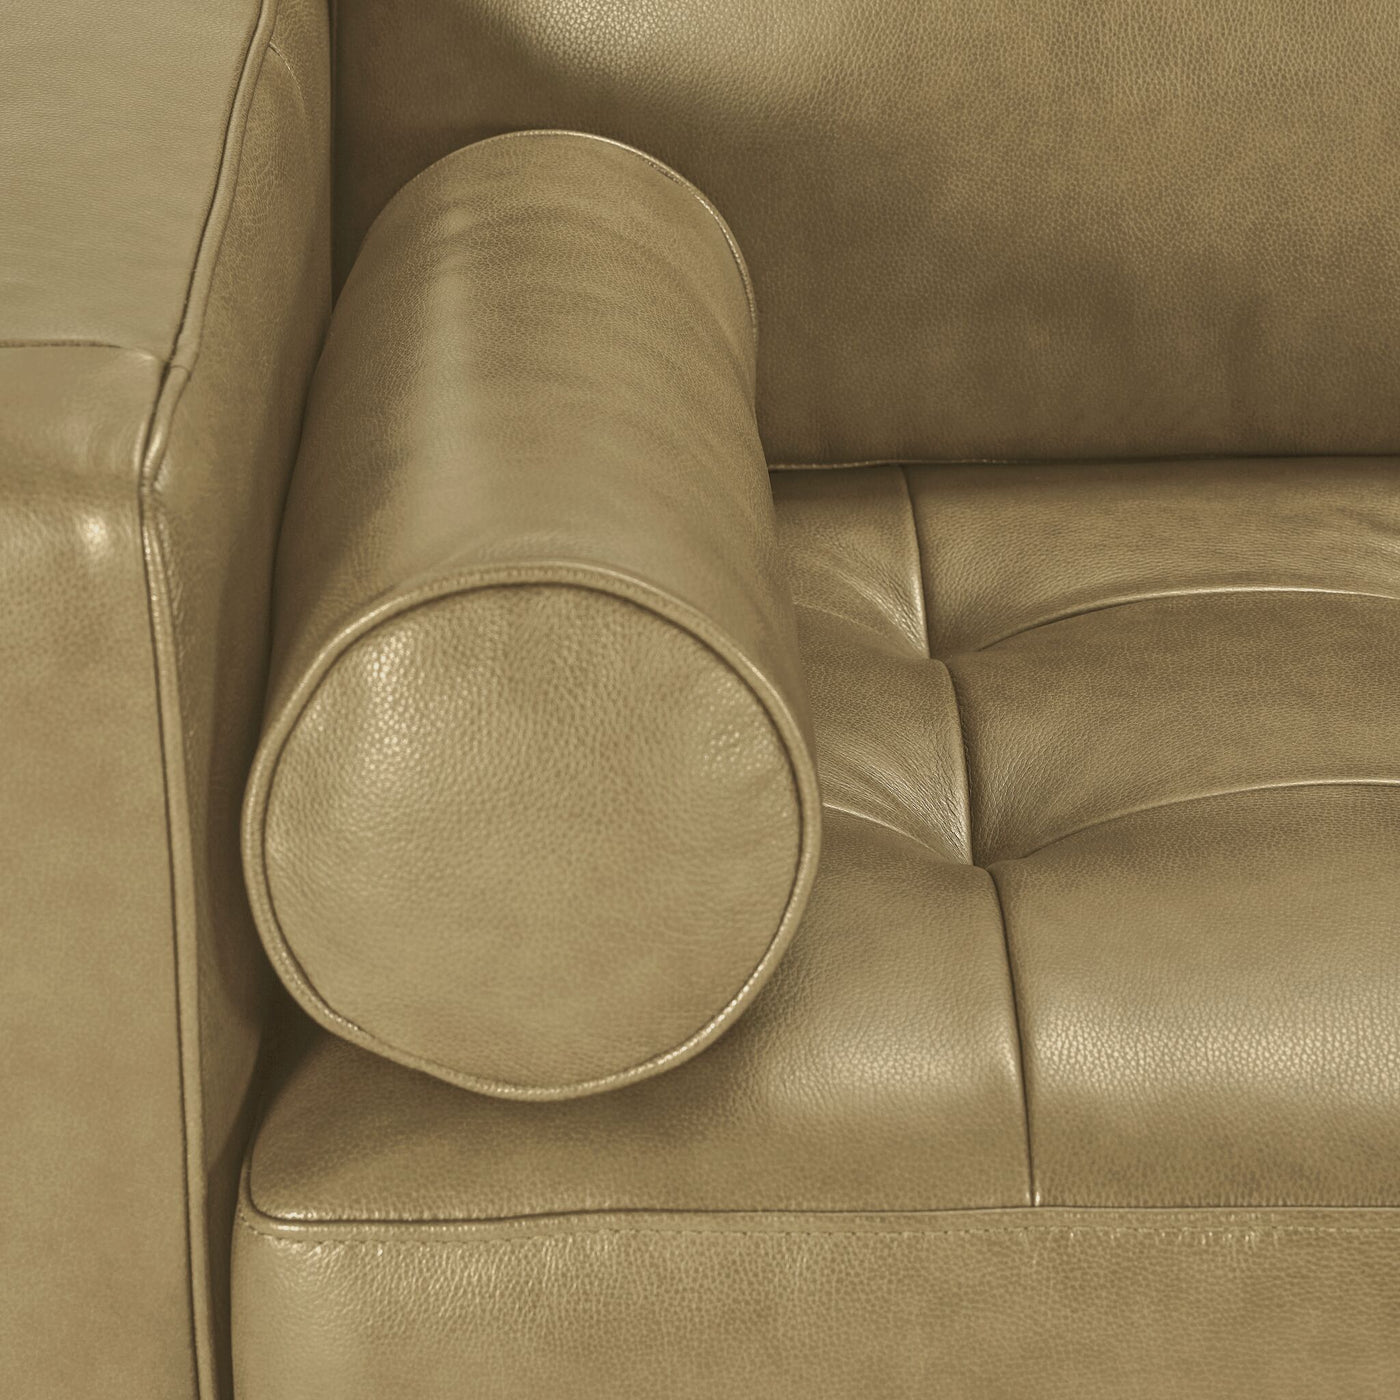 Bari Leather Chair - Stone